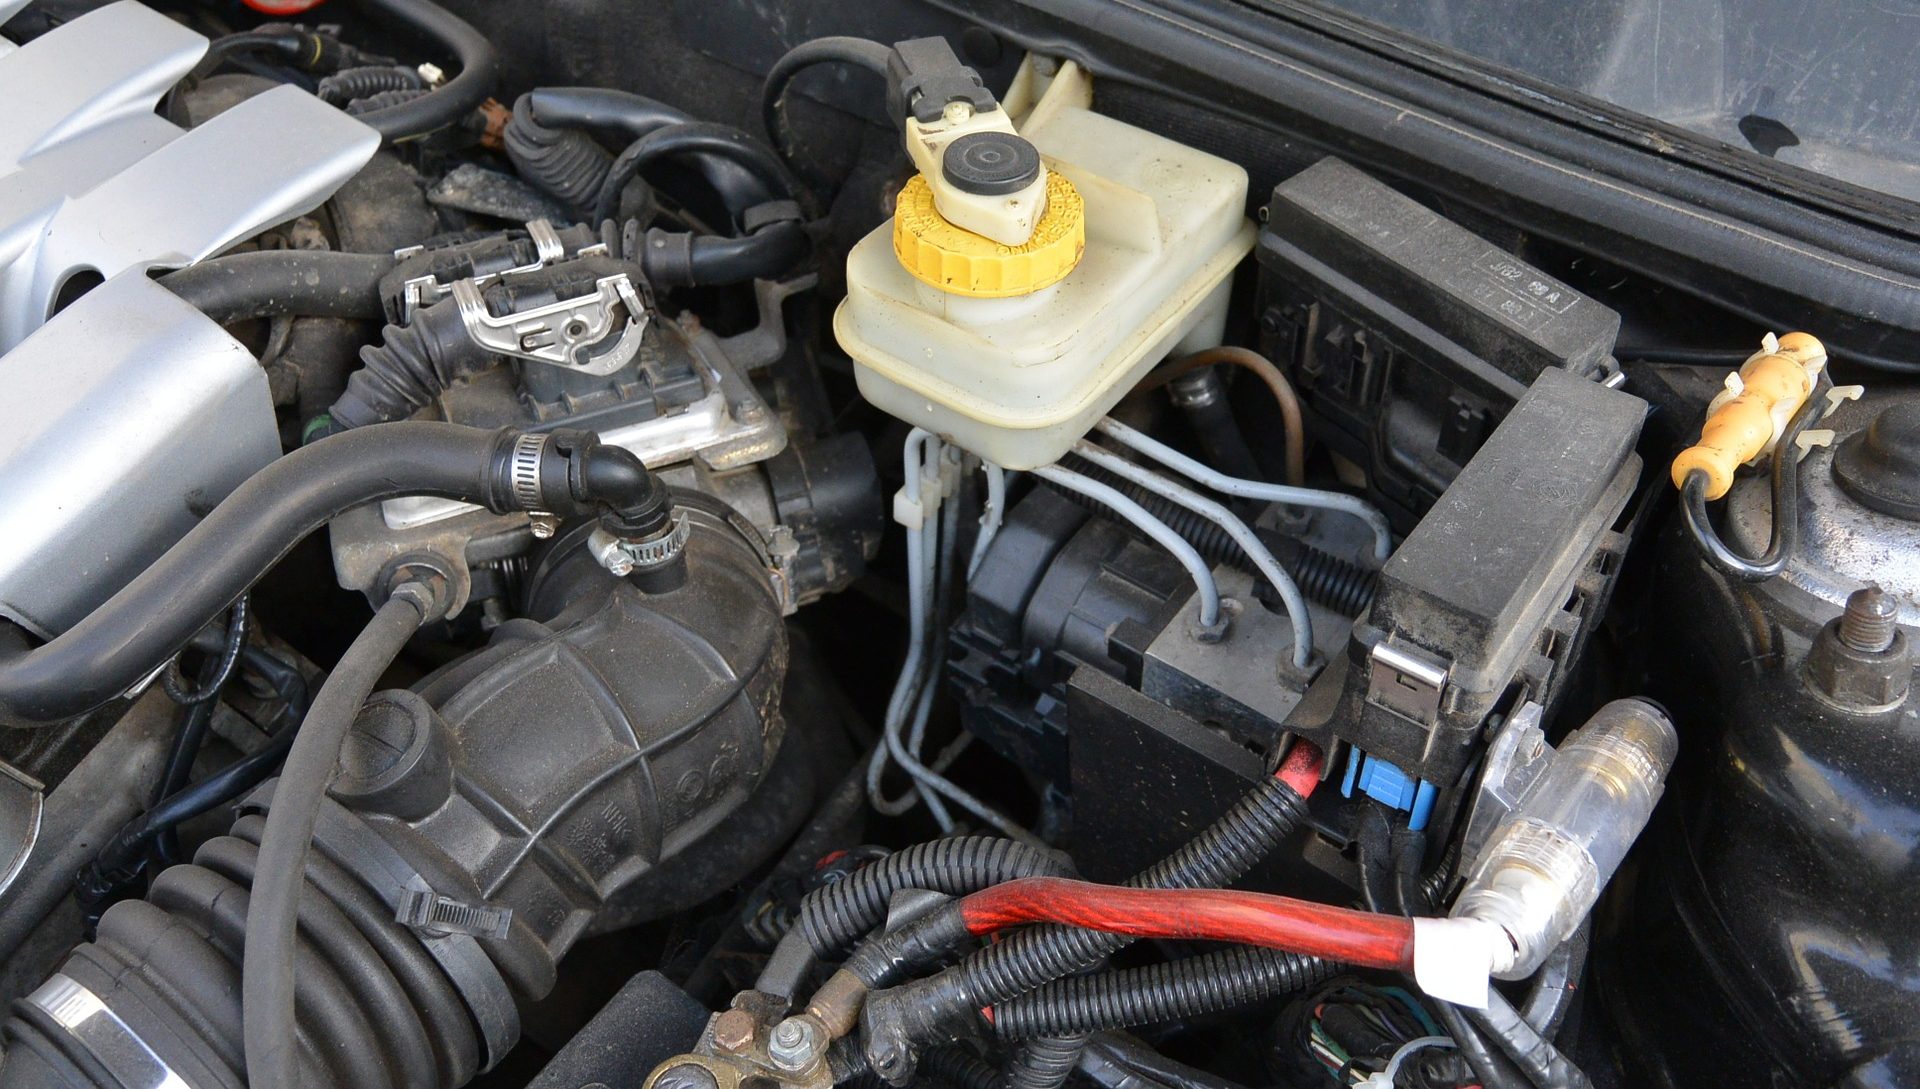 Car component inspection